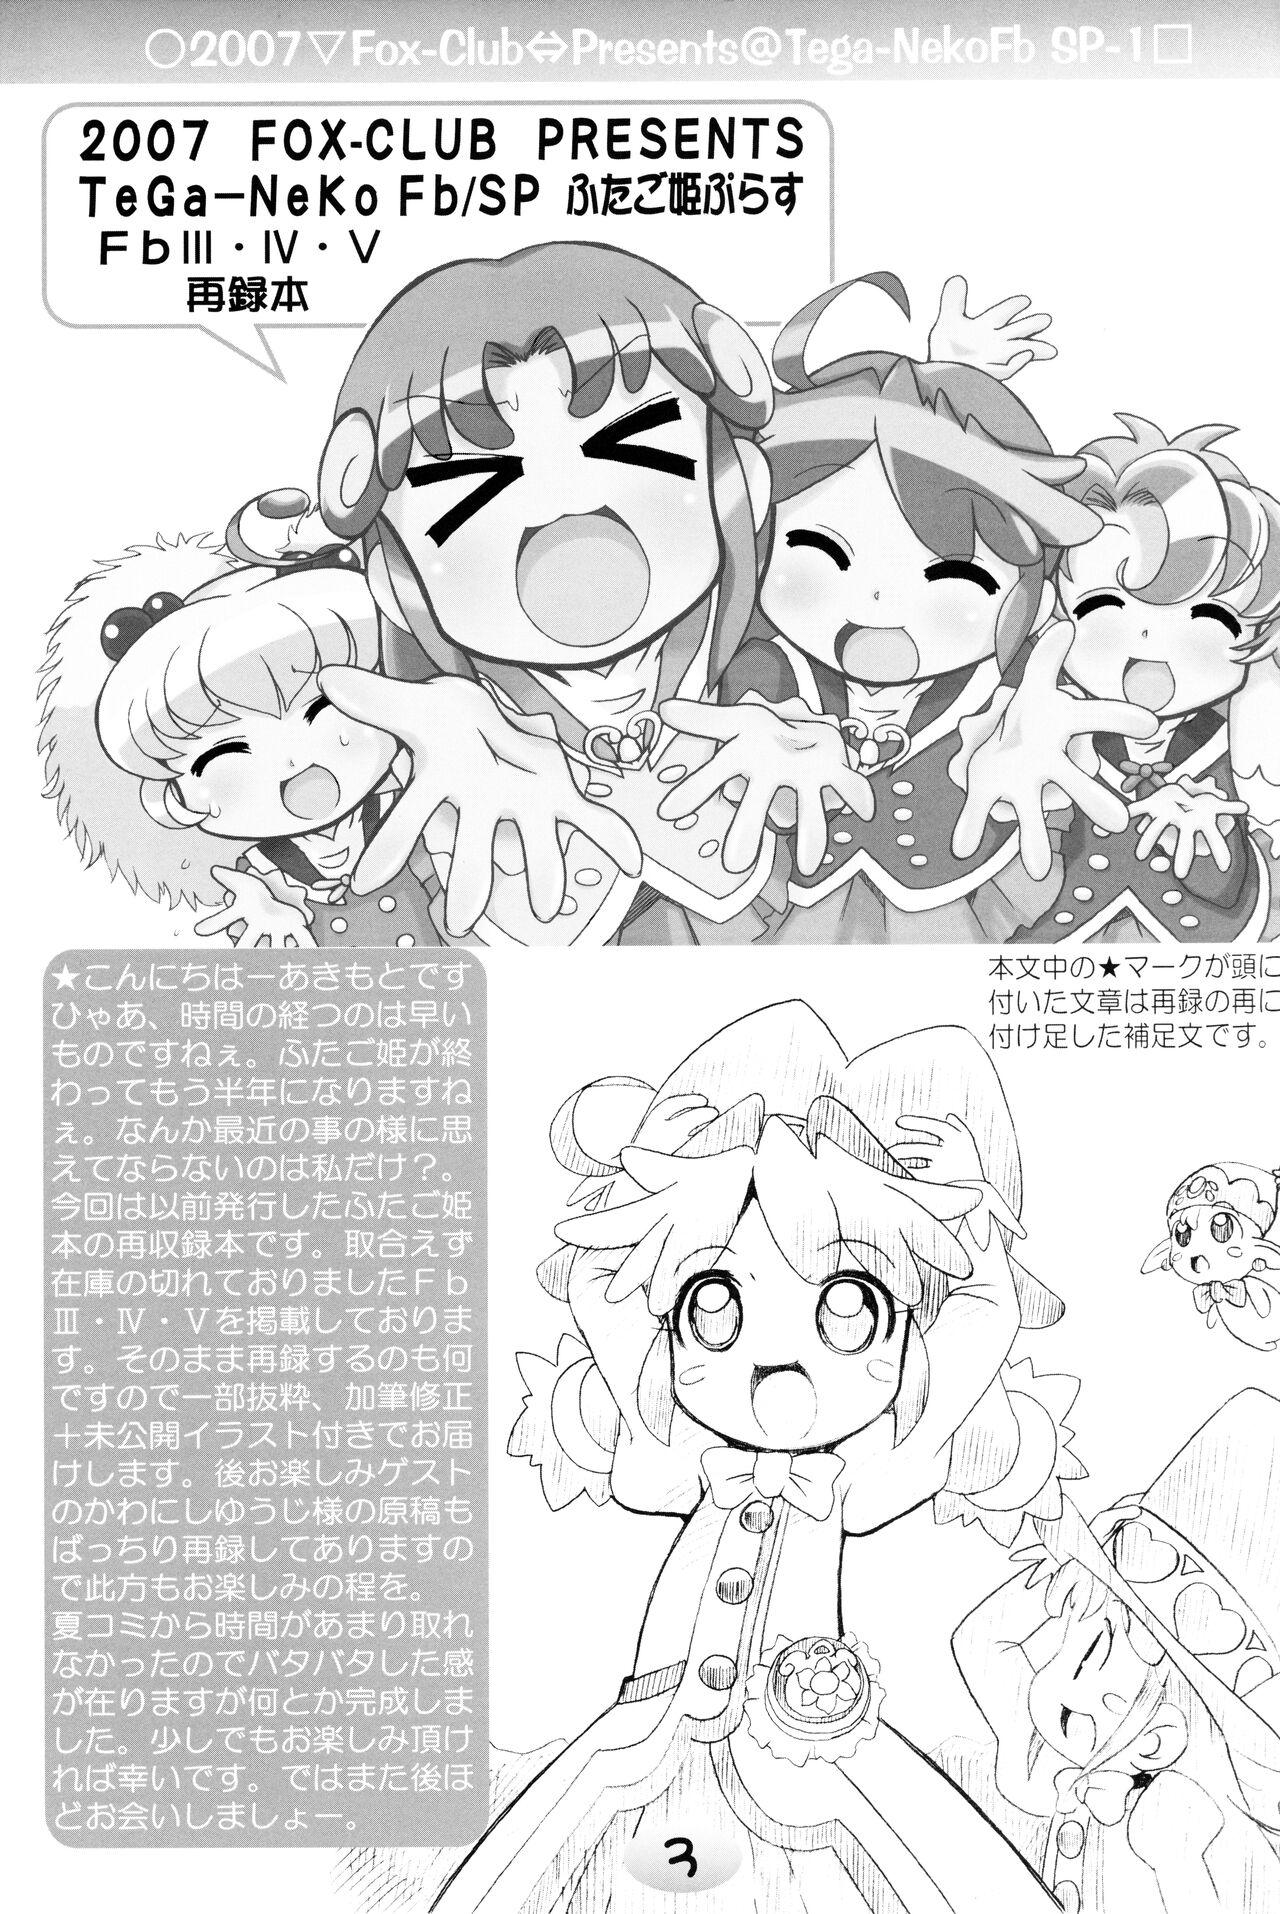 Ethnic TeGa-NeKo Fb/SP Futago Hime Plus - Fushigiboshi no futagohime | twin princesses of the wonder planet Gaping - Page 2